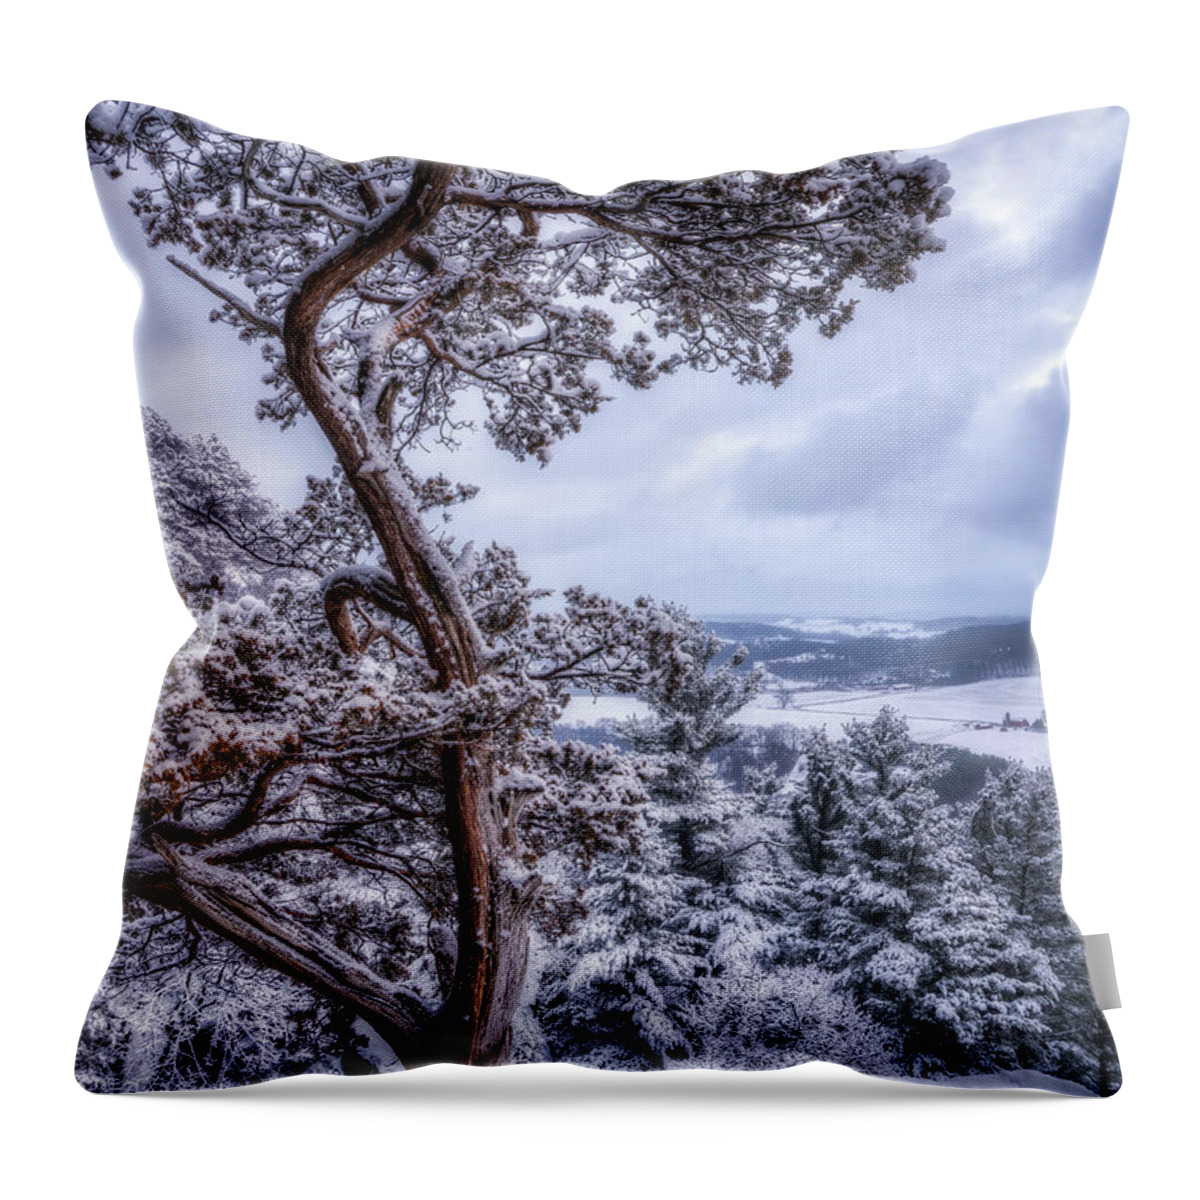 Snow Throw Pillow featuring the photograph Winter Wonderland #2 by Brad Bellisle